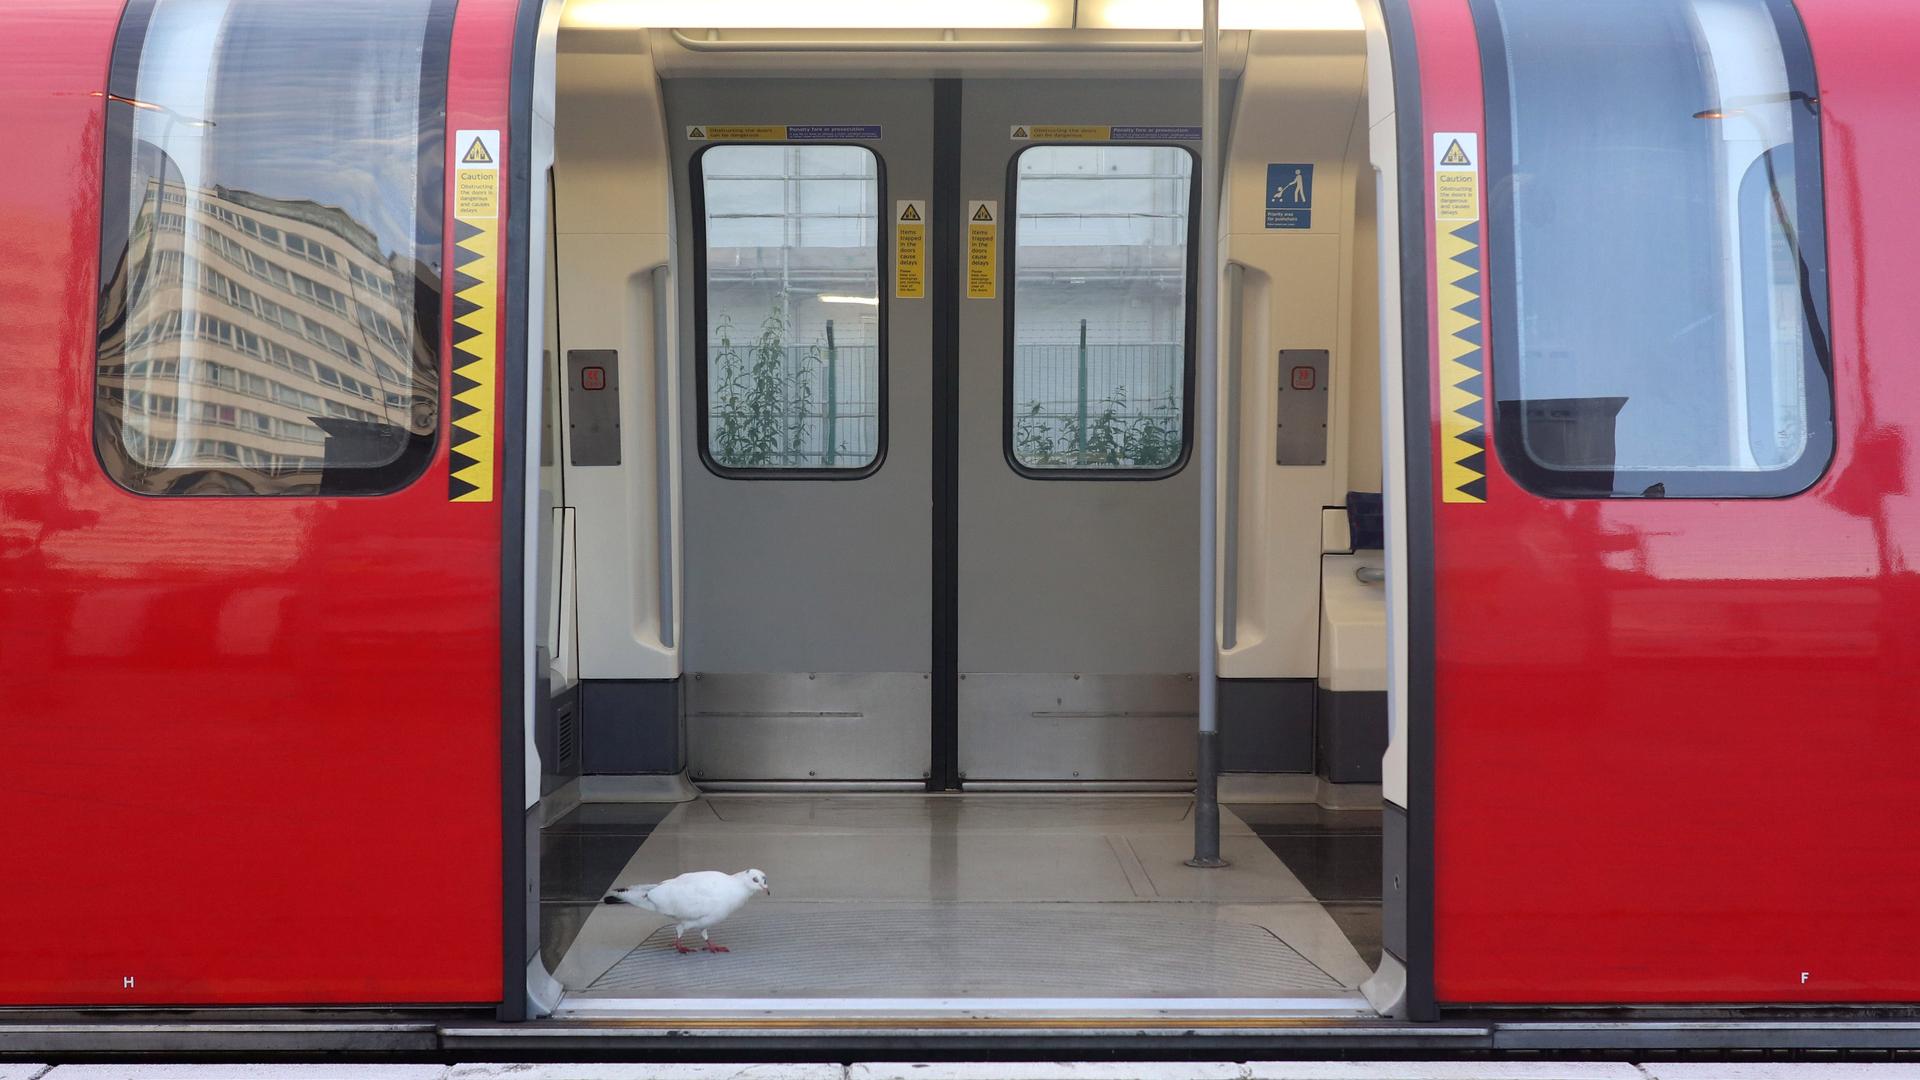 A bird walks inside a commuter underground tube train